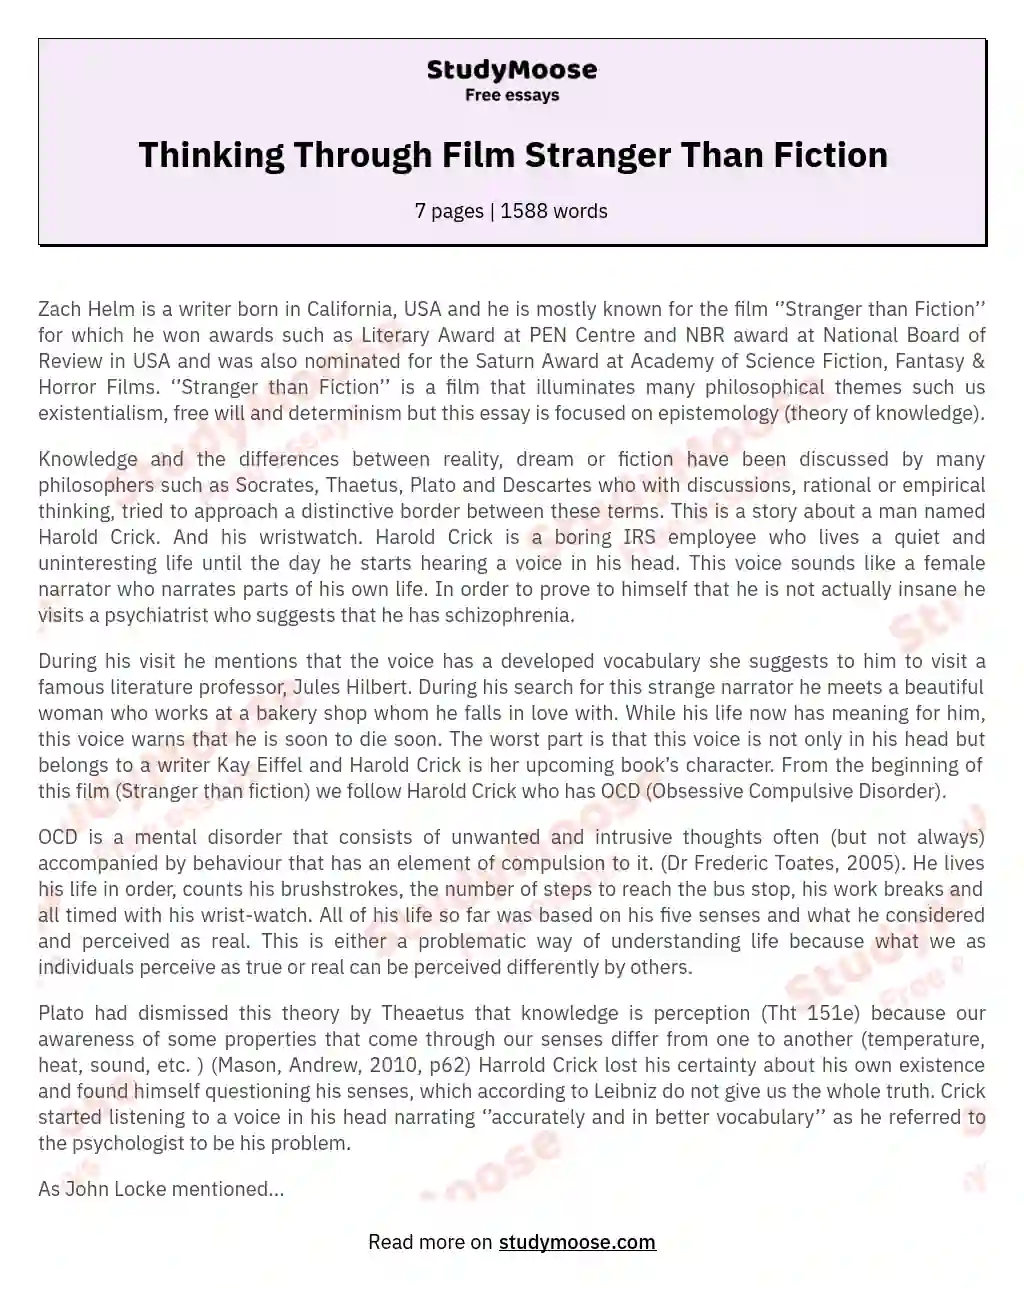 Thinking Through Film Stranger Than Fiction essay